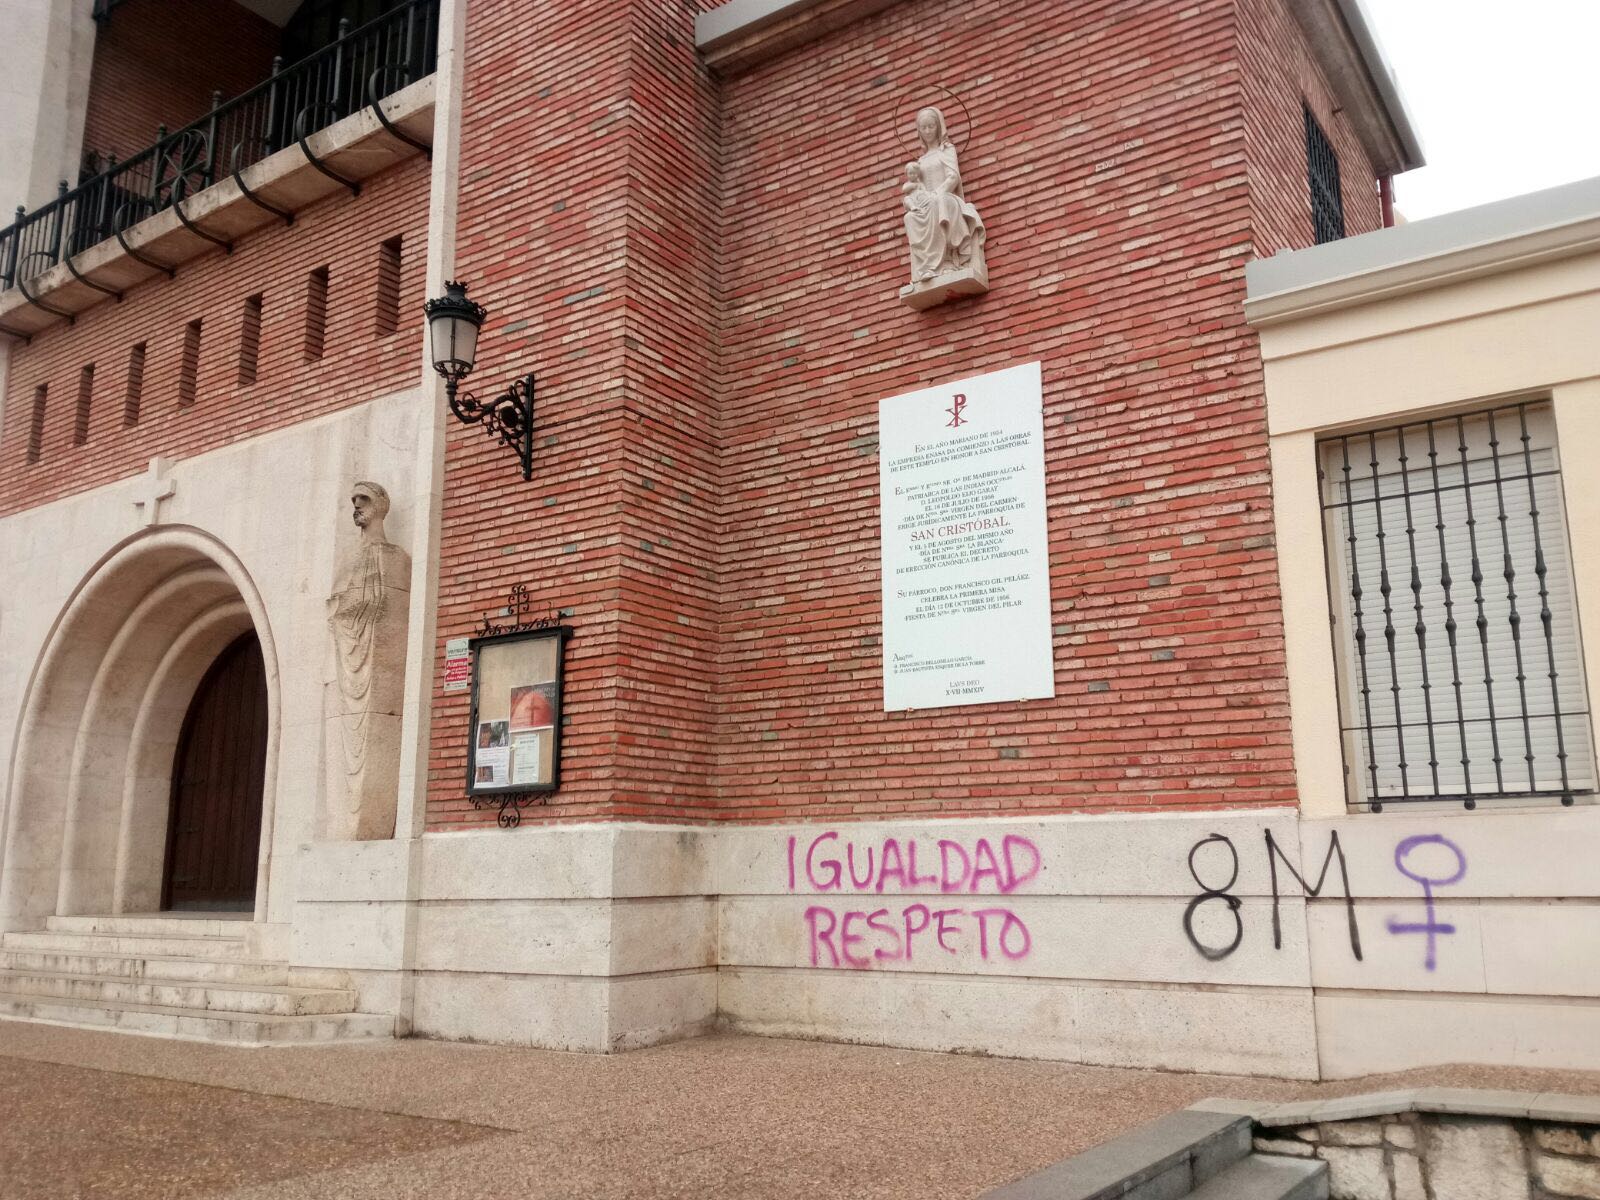 Pro-abortion graffiti attacks on Madrid churches   